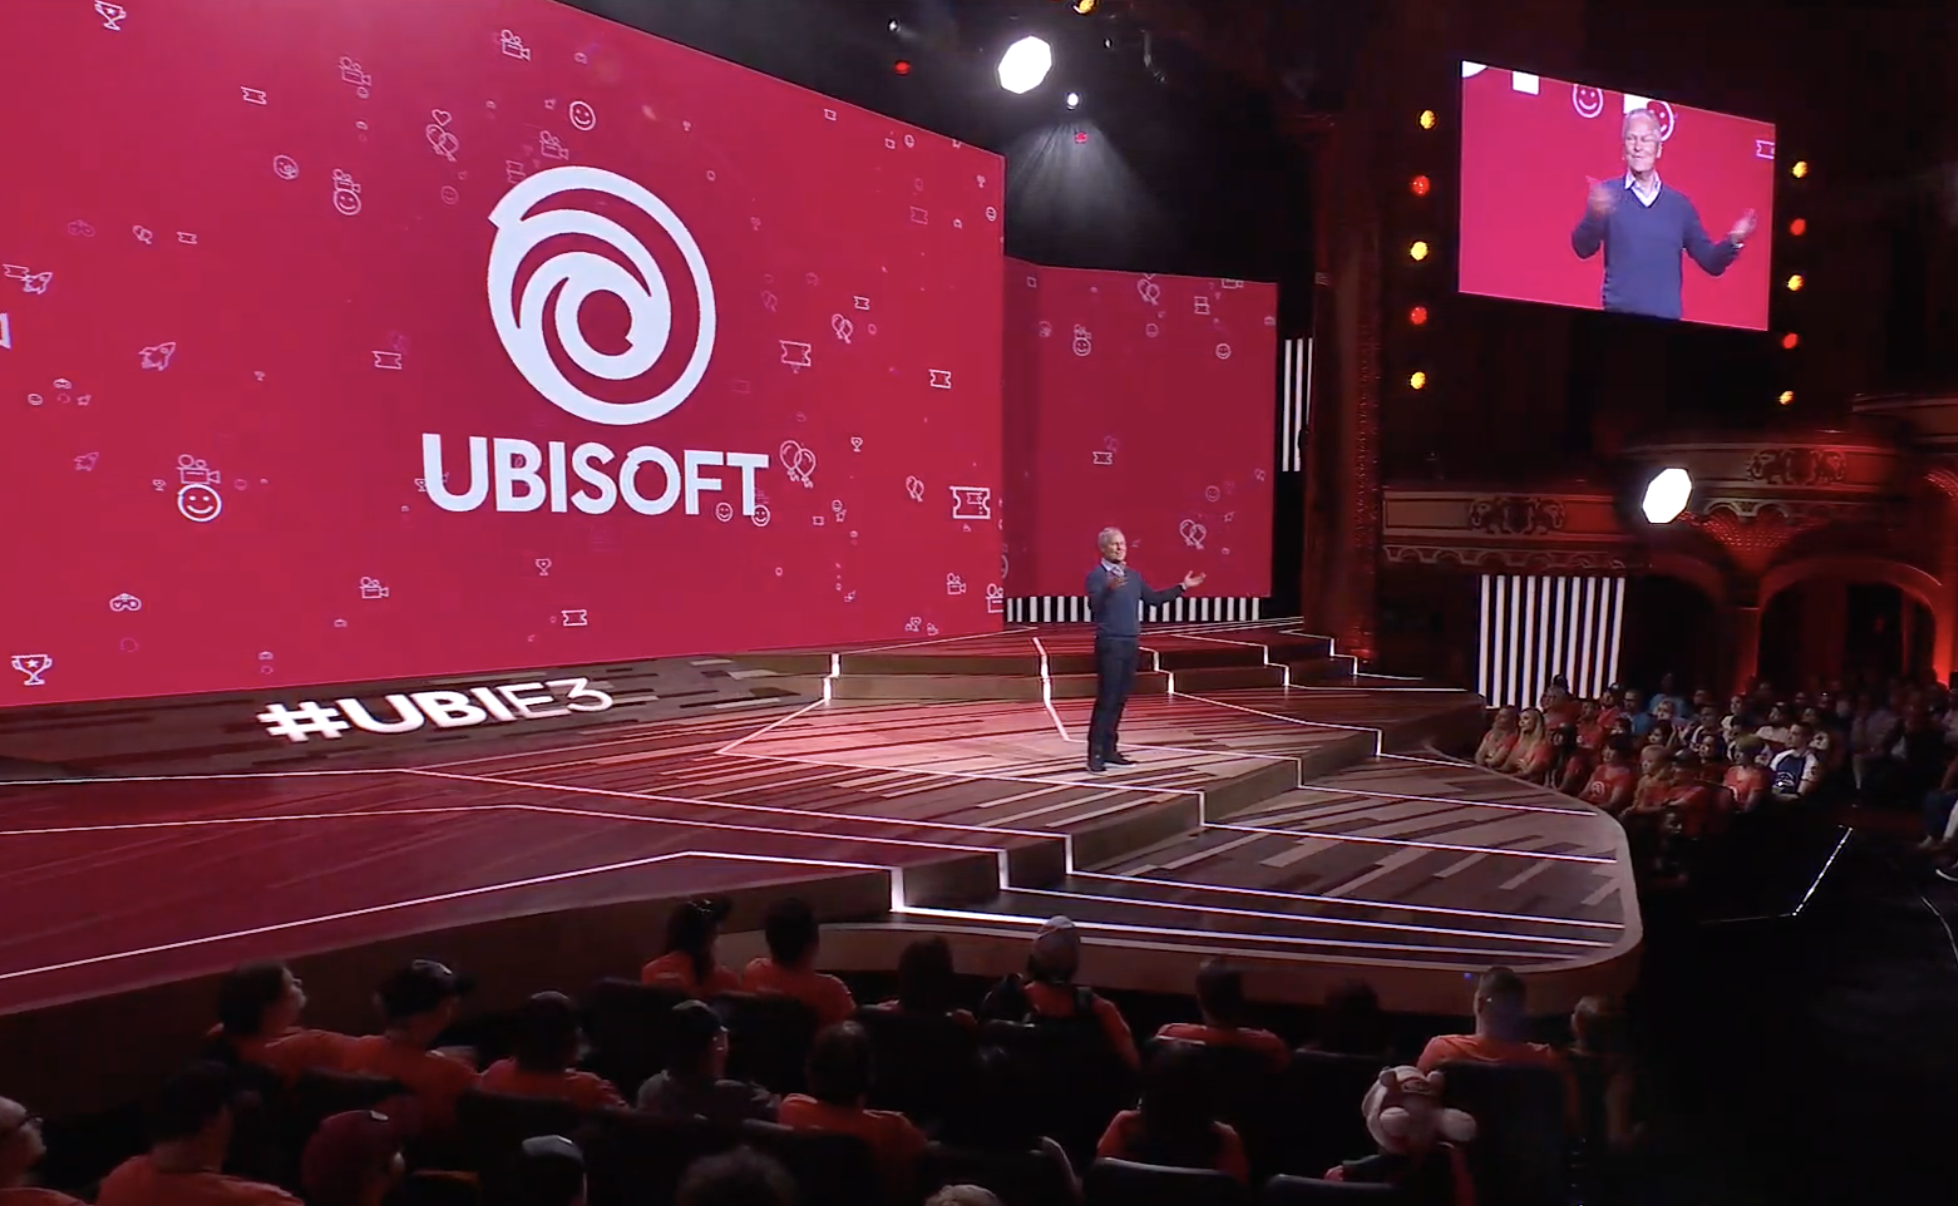 Сцена Ubisoft на e3 2019. Игровая конференция e3 2019. Юбисофт форвард 2023. E3 2019 ведущая. Forwarded events